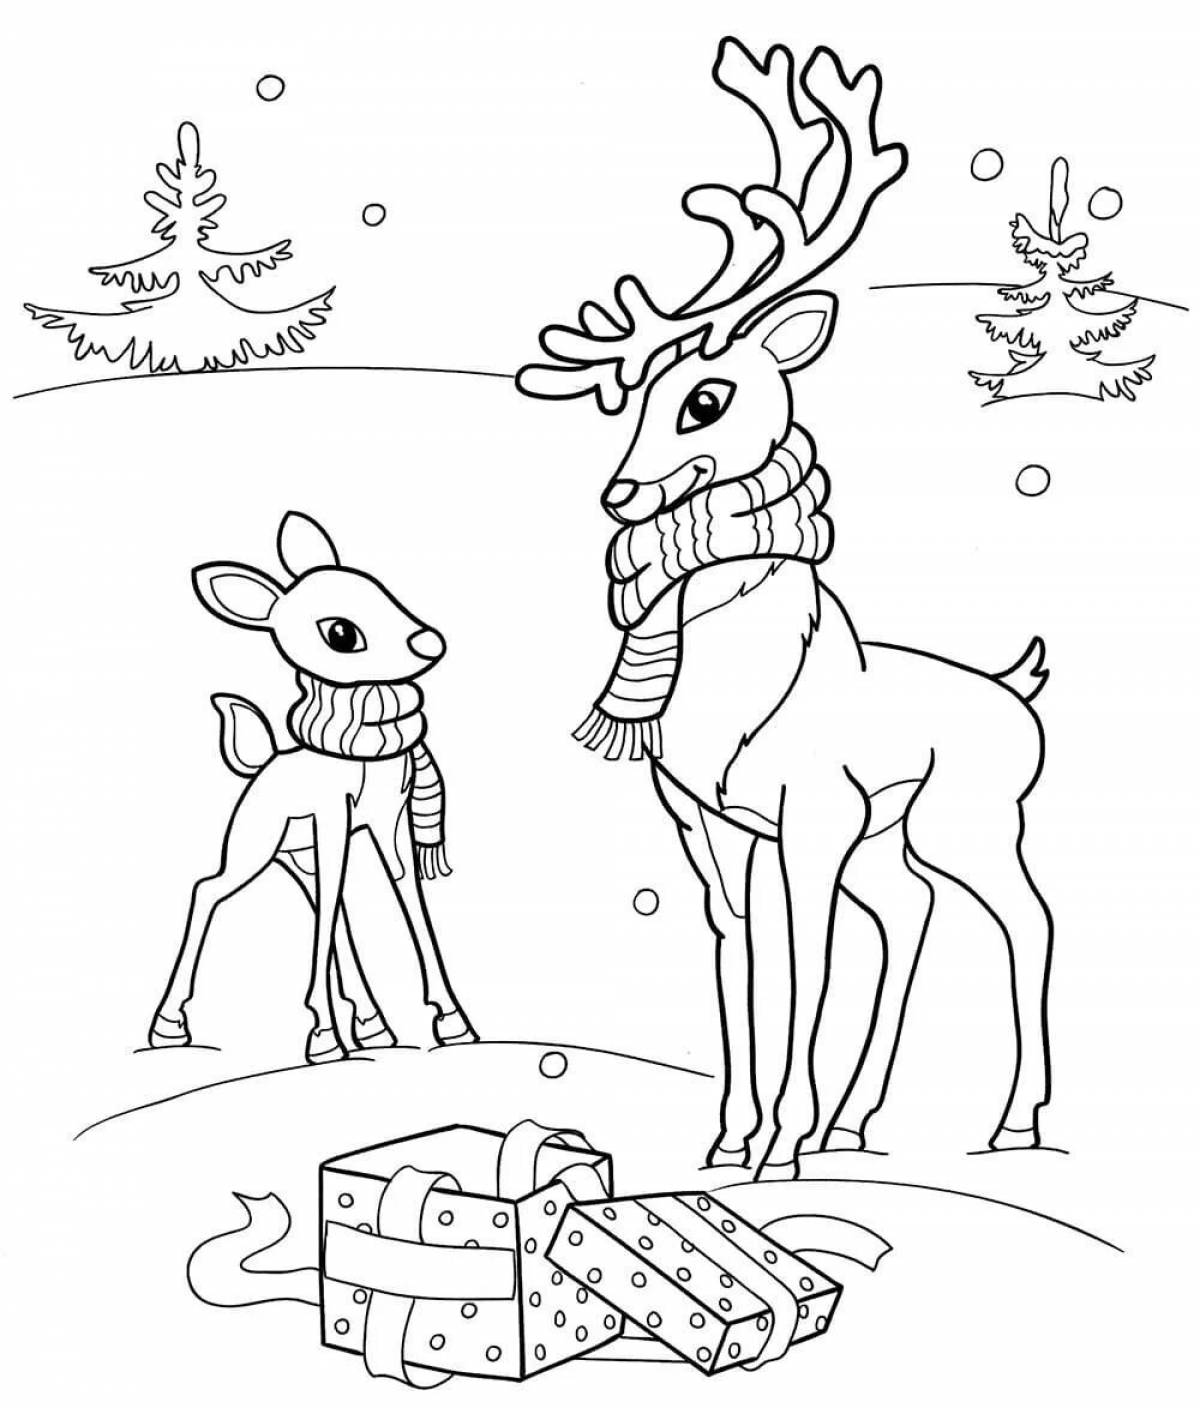 Dreamy deer coloring book for kids 6-7 years old